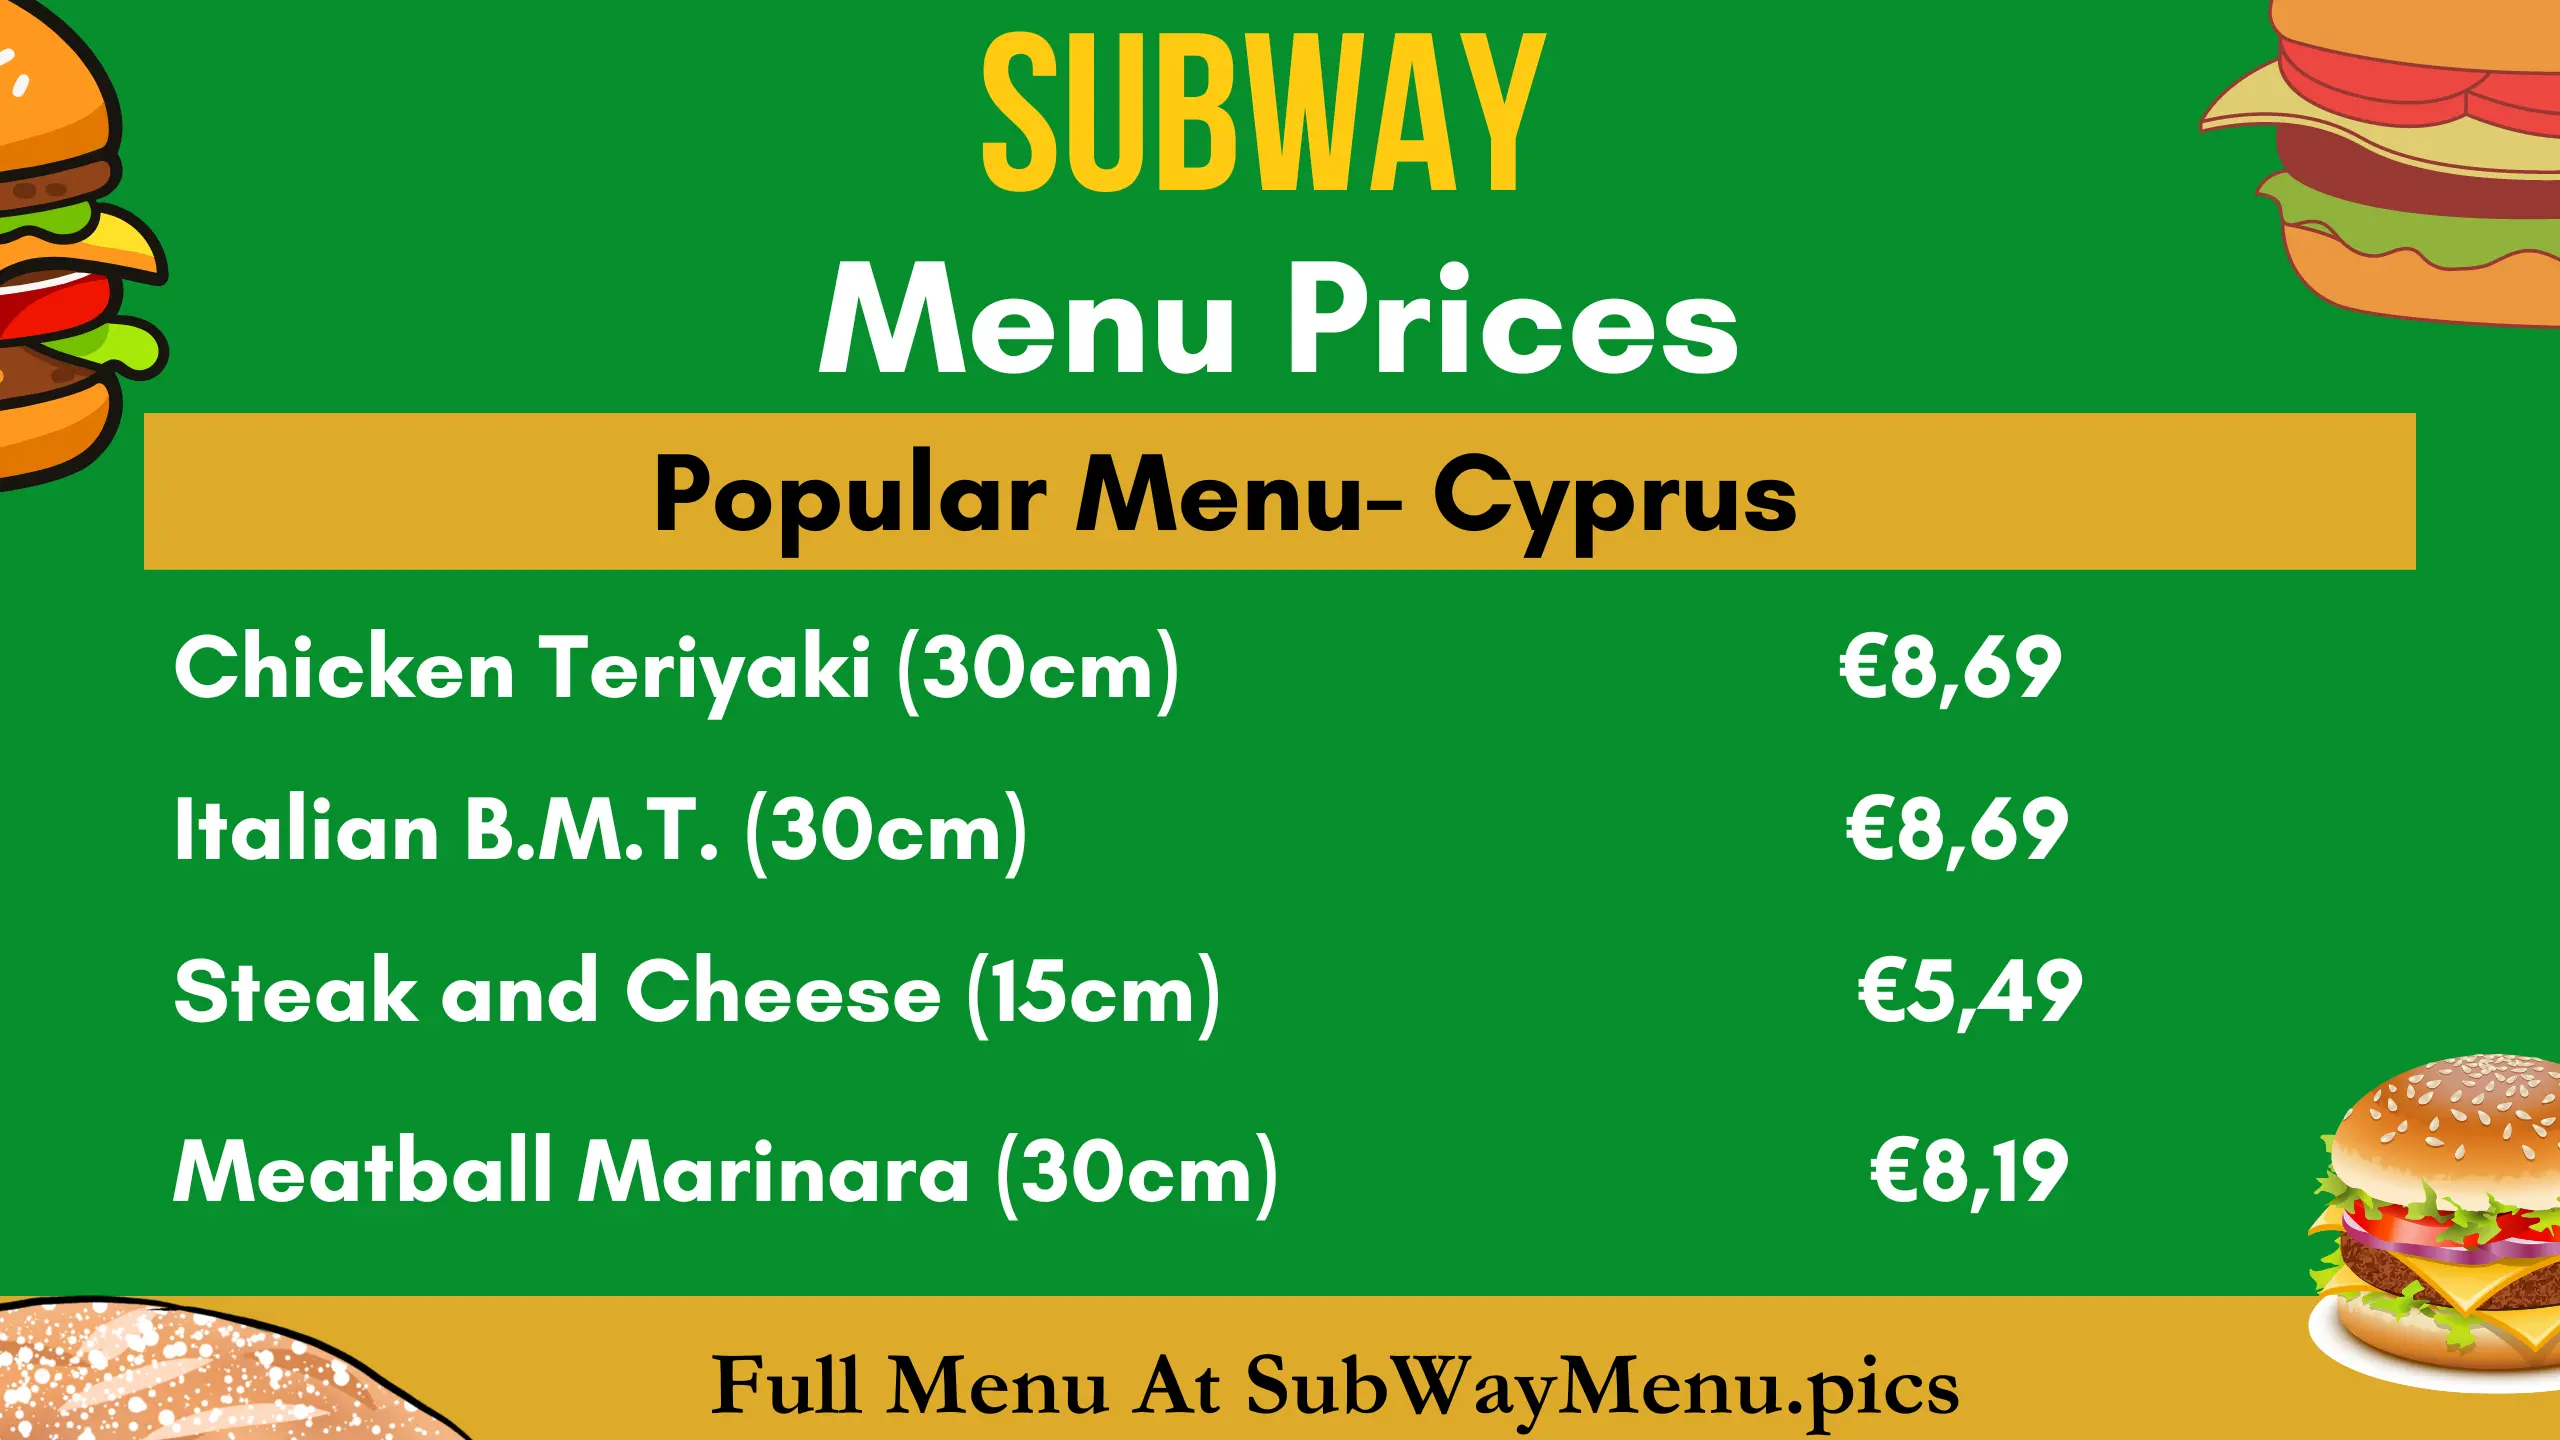 Cyprus Subway Menu With Prices